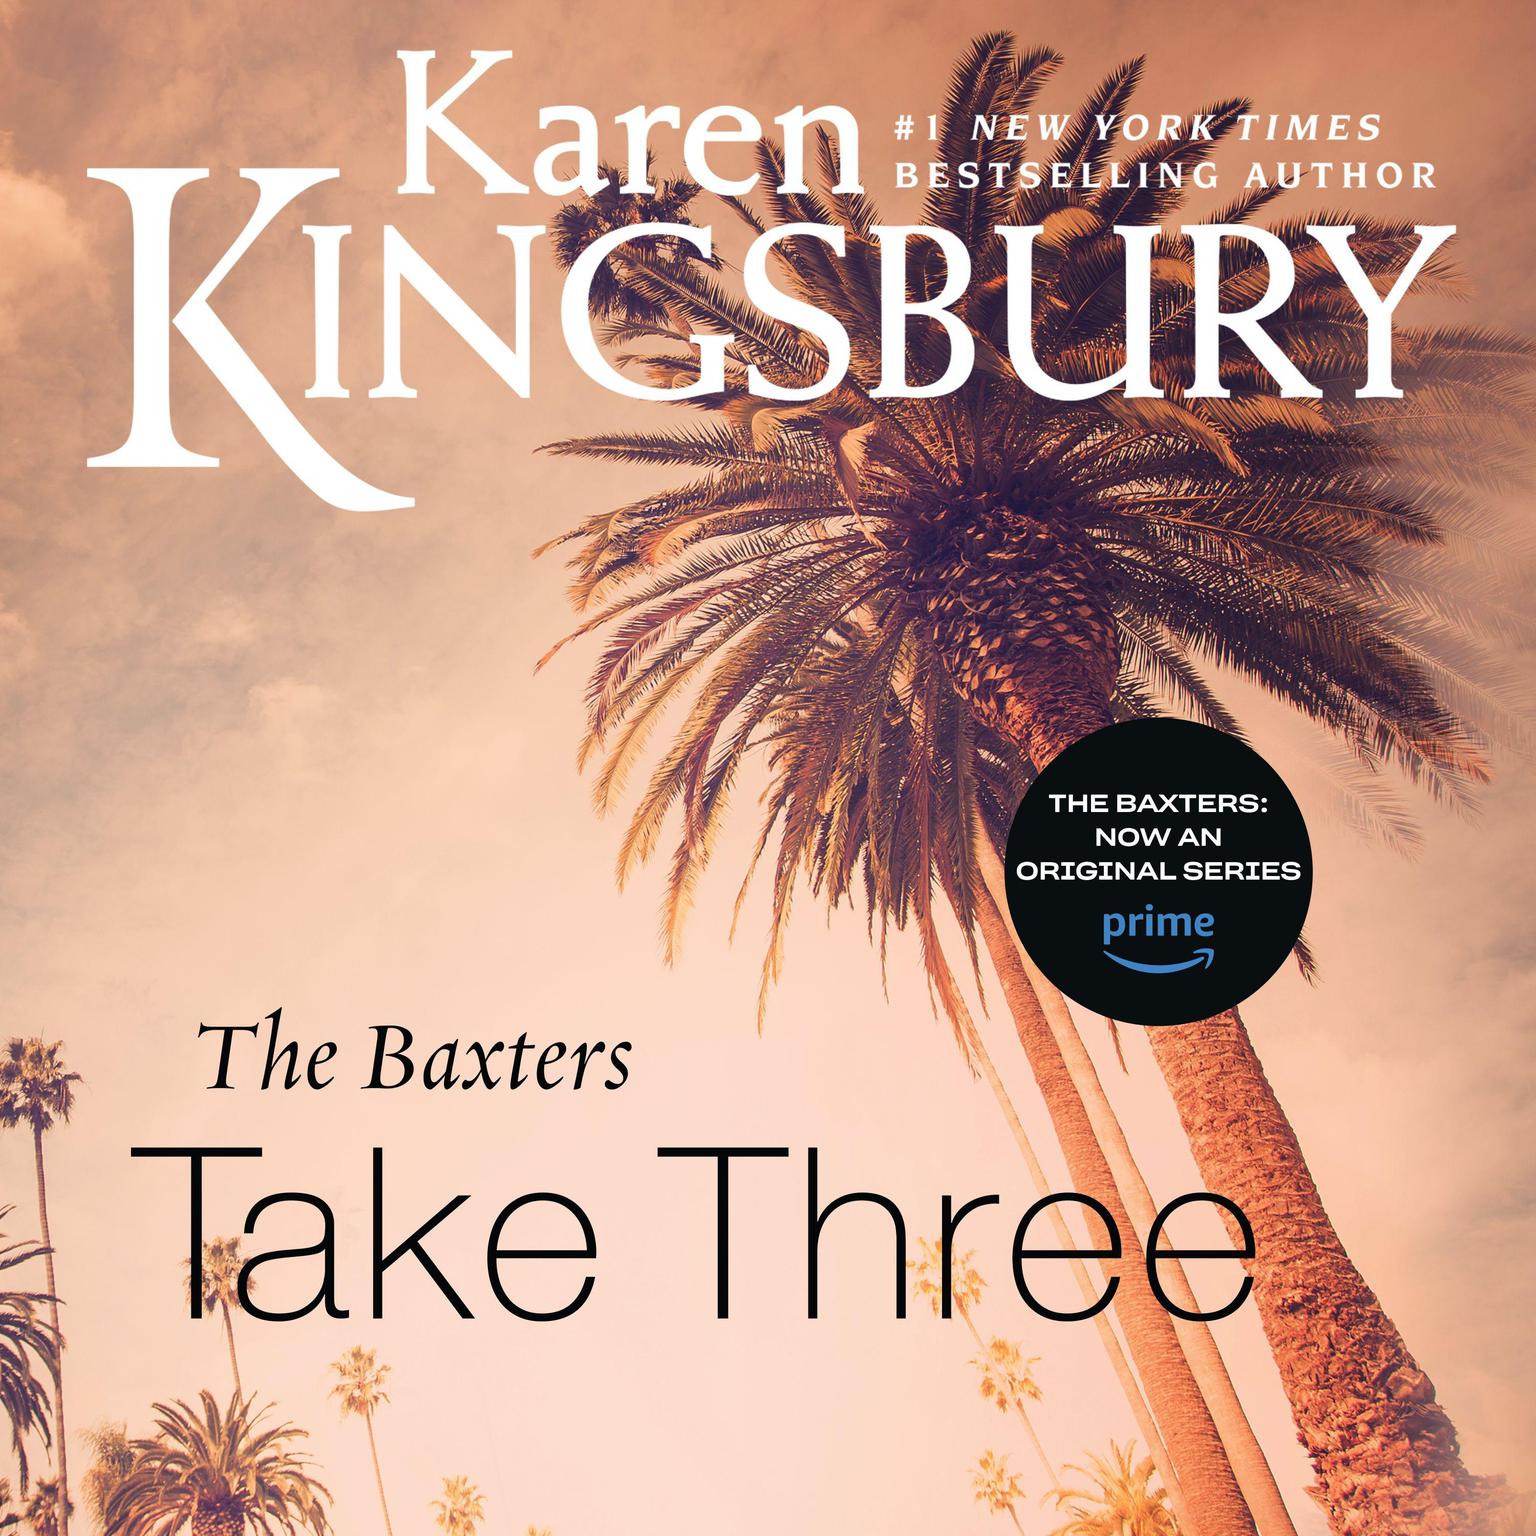 The Baxters Take Three Audiobook by Karen Kingsbury — Download Now